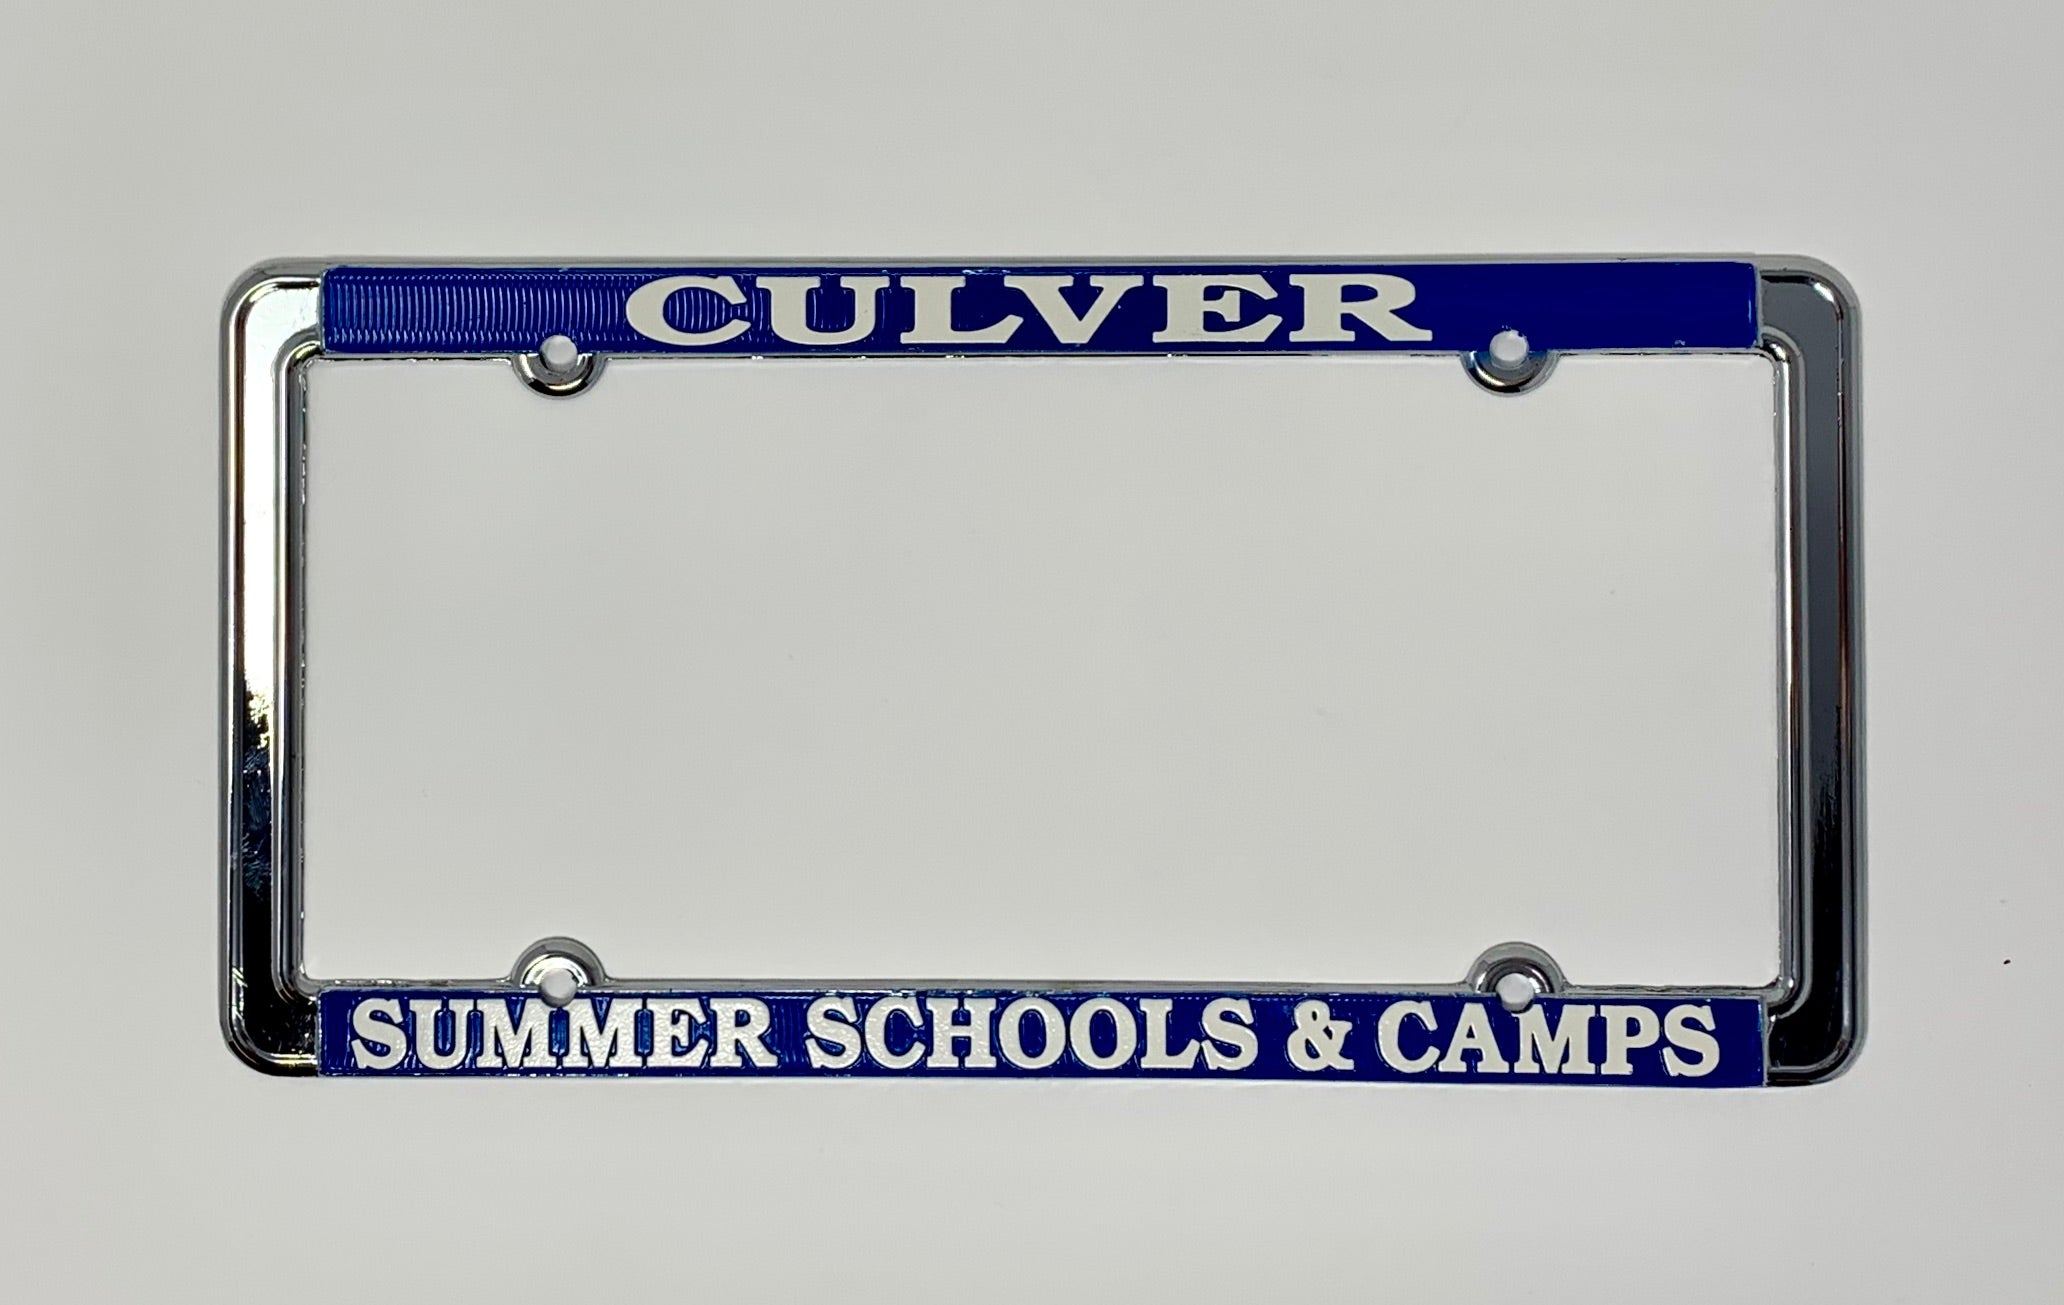 Culver Summer Schools &amp; Camps License Plate Frame